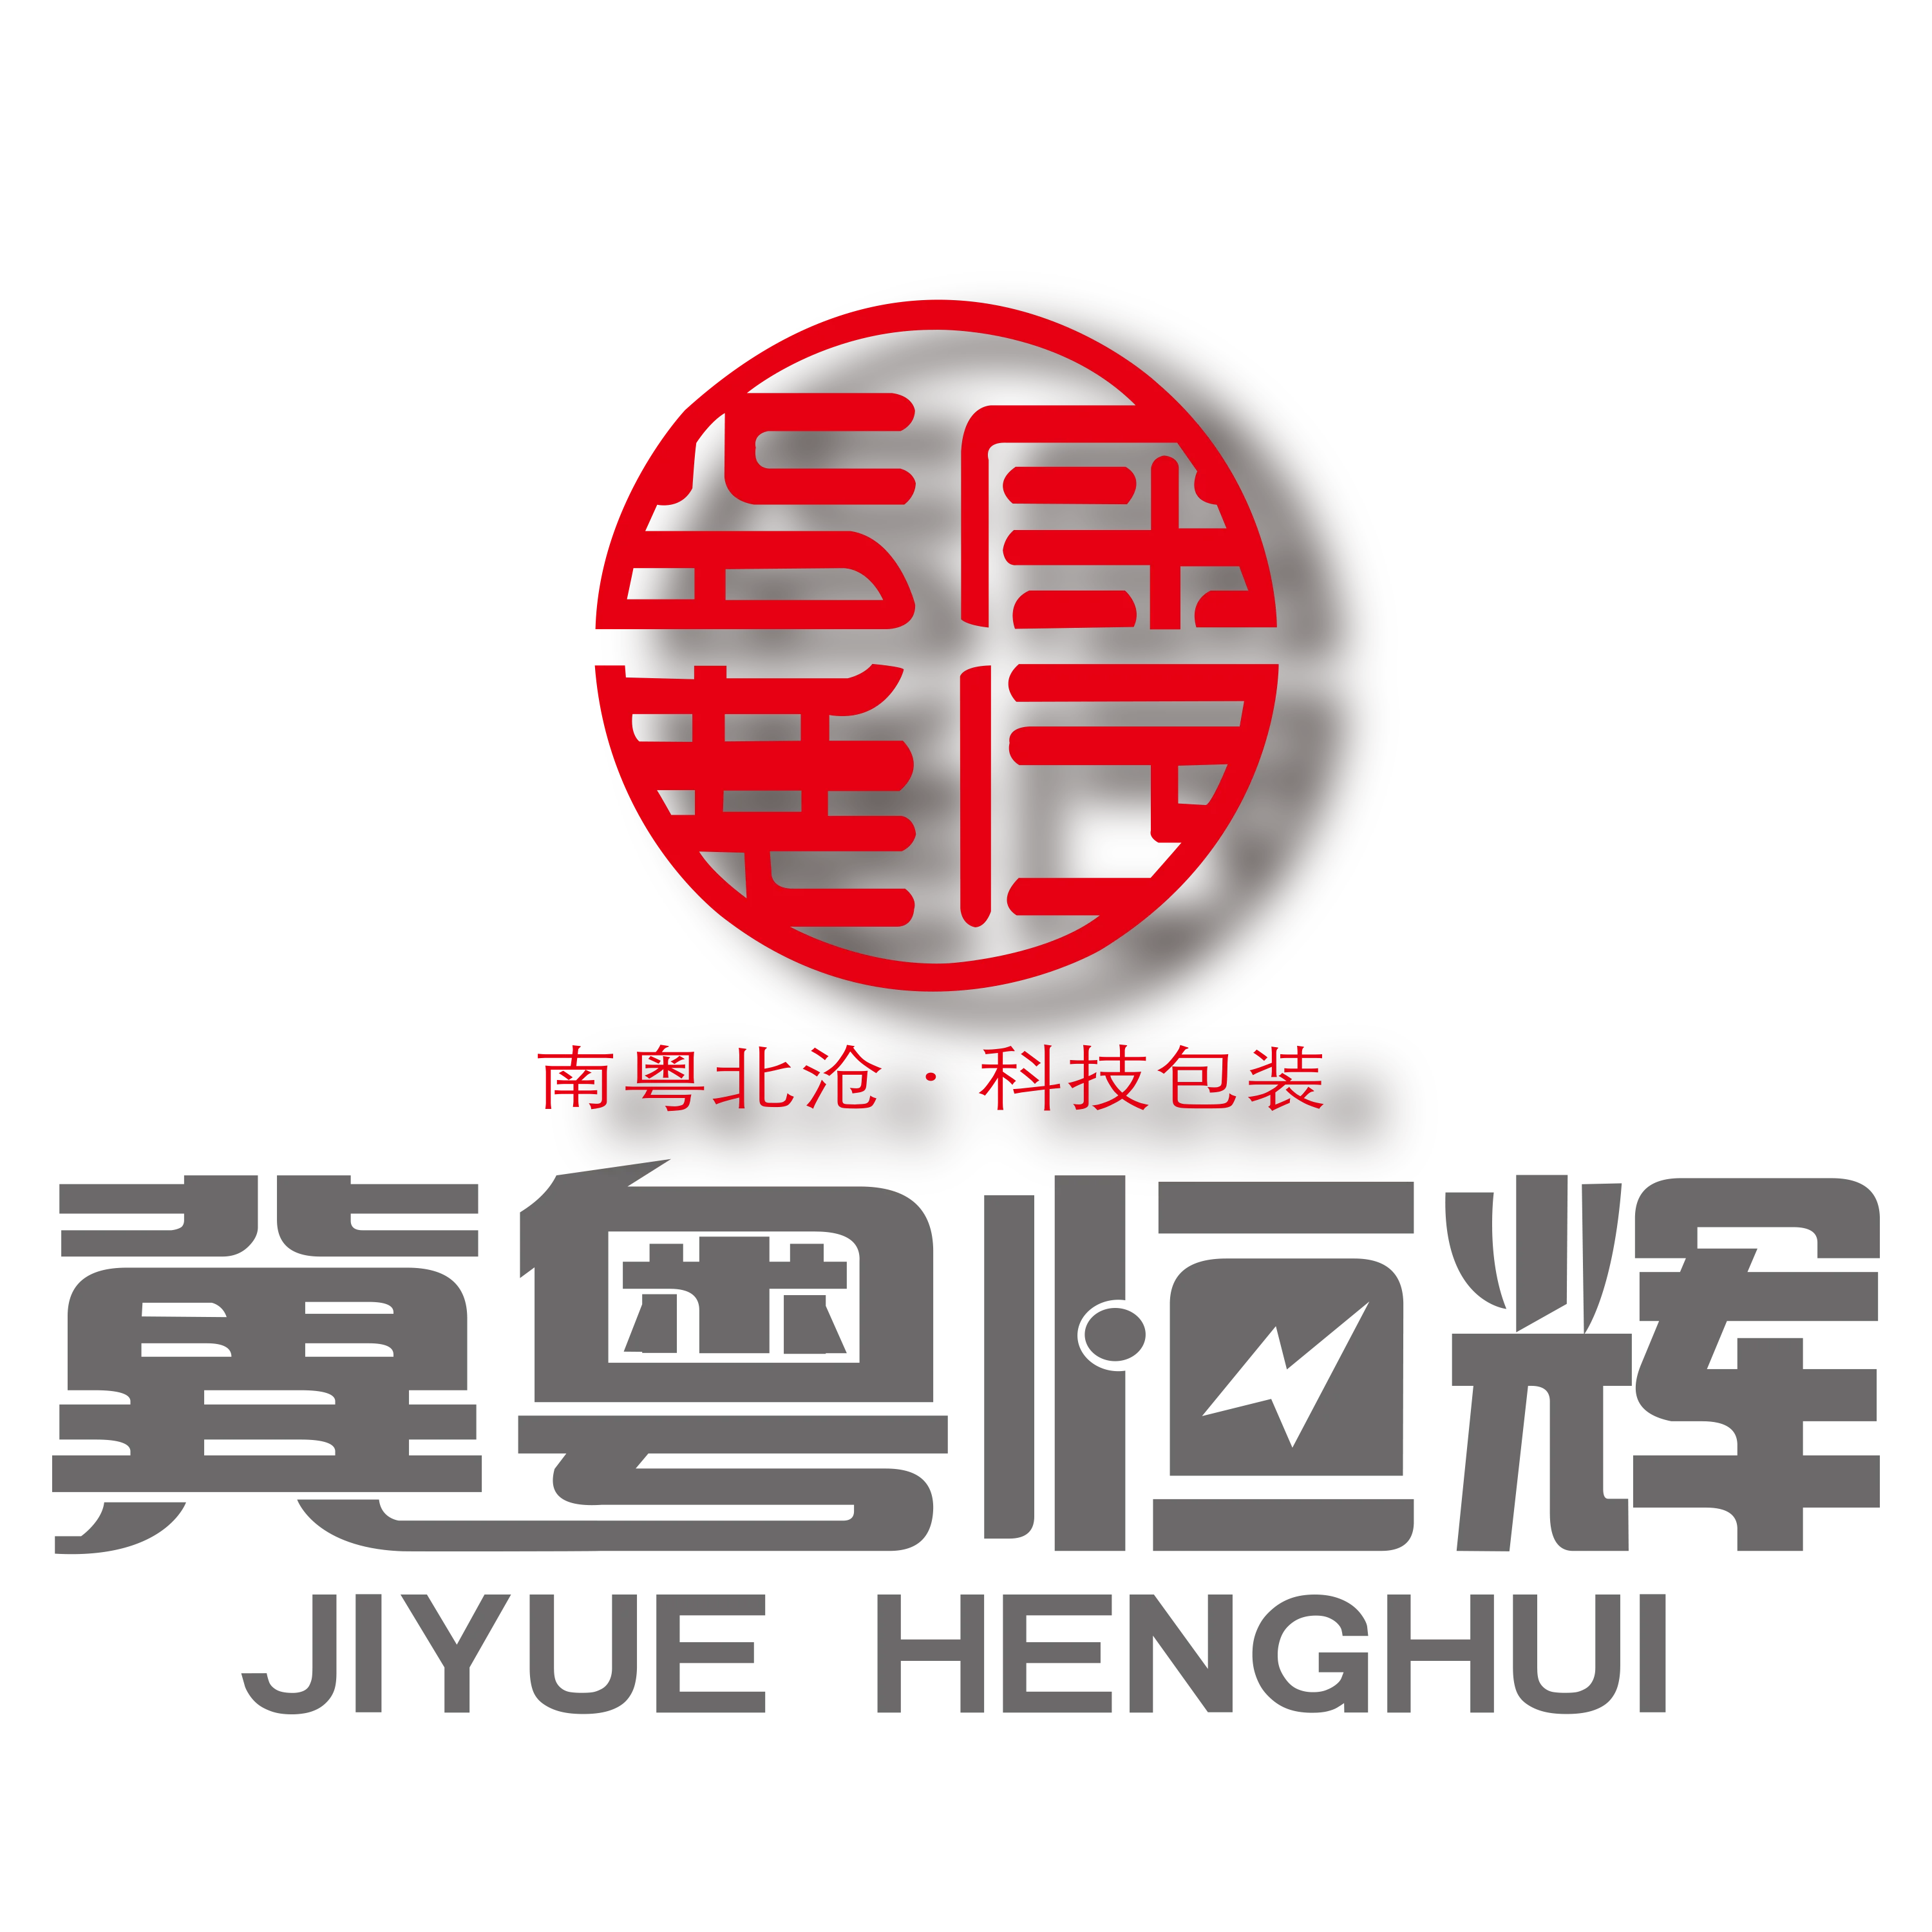 Company Overview - Cangzhou Jiyue Henghui Plastic Industry Co., Ltd.